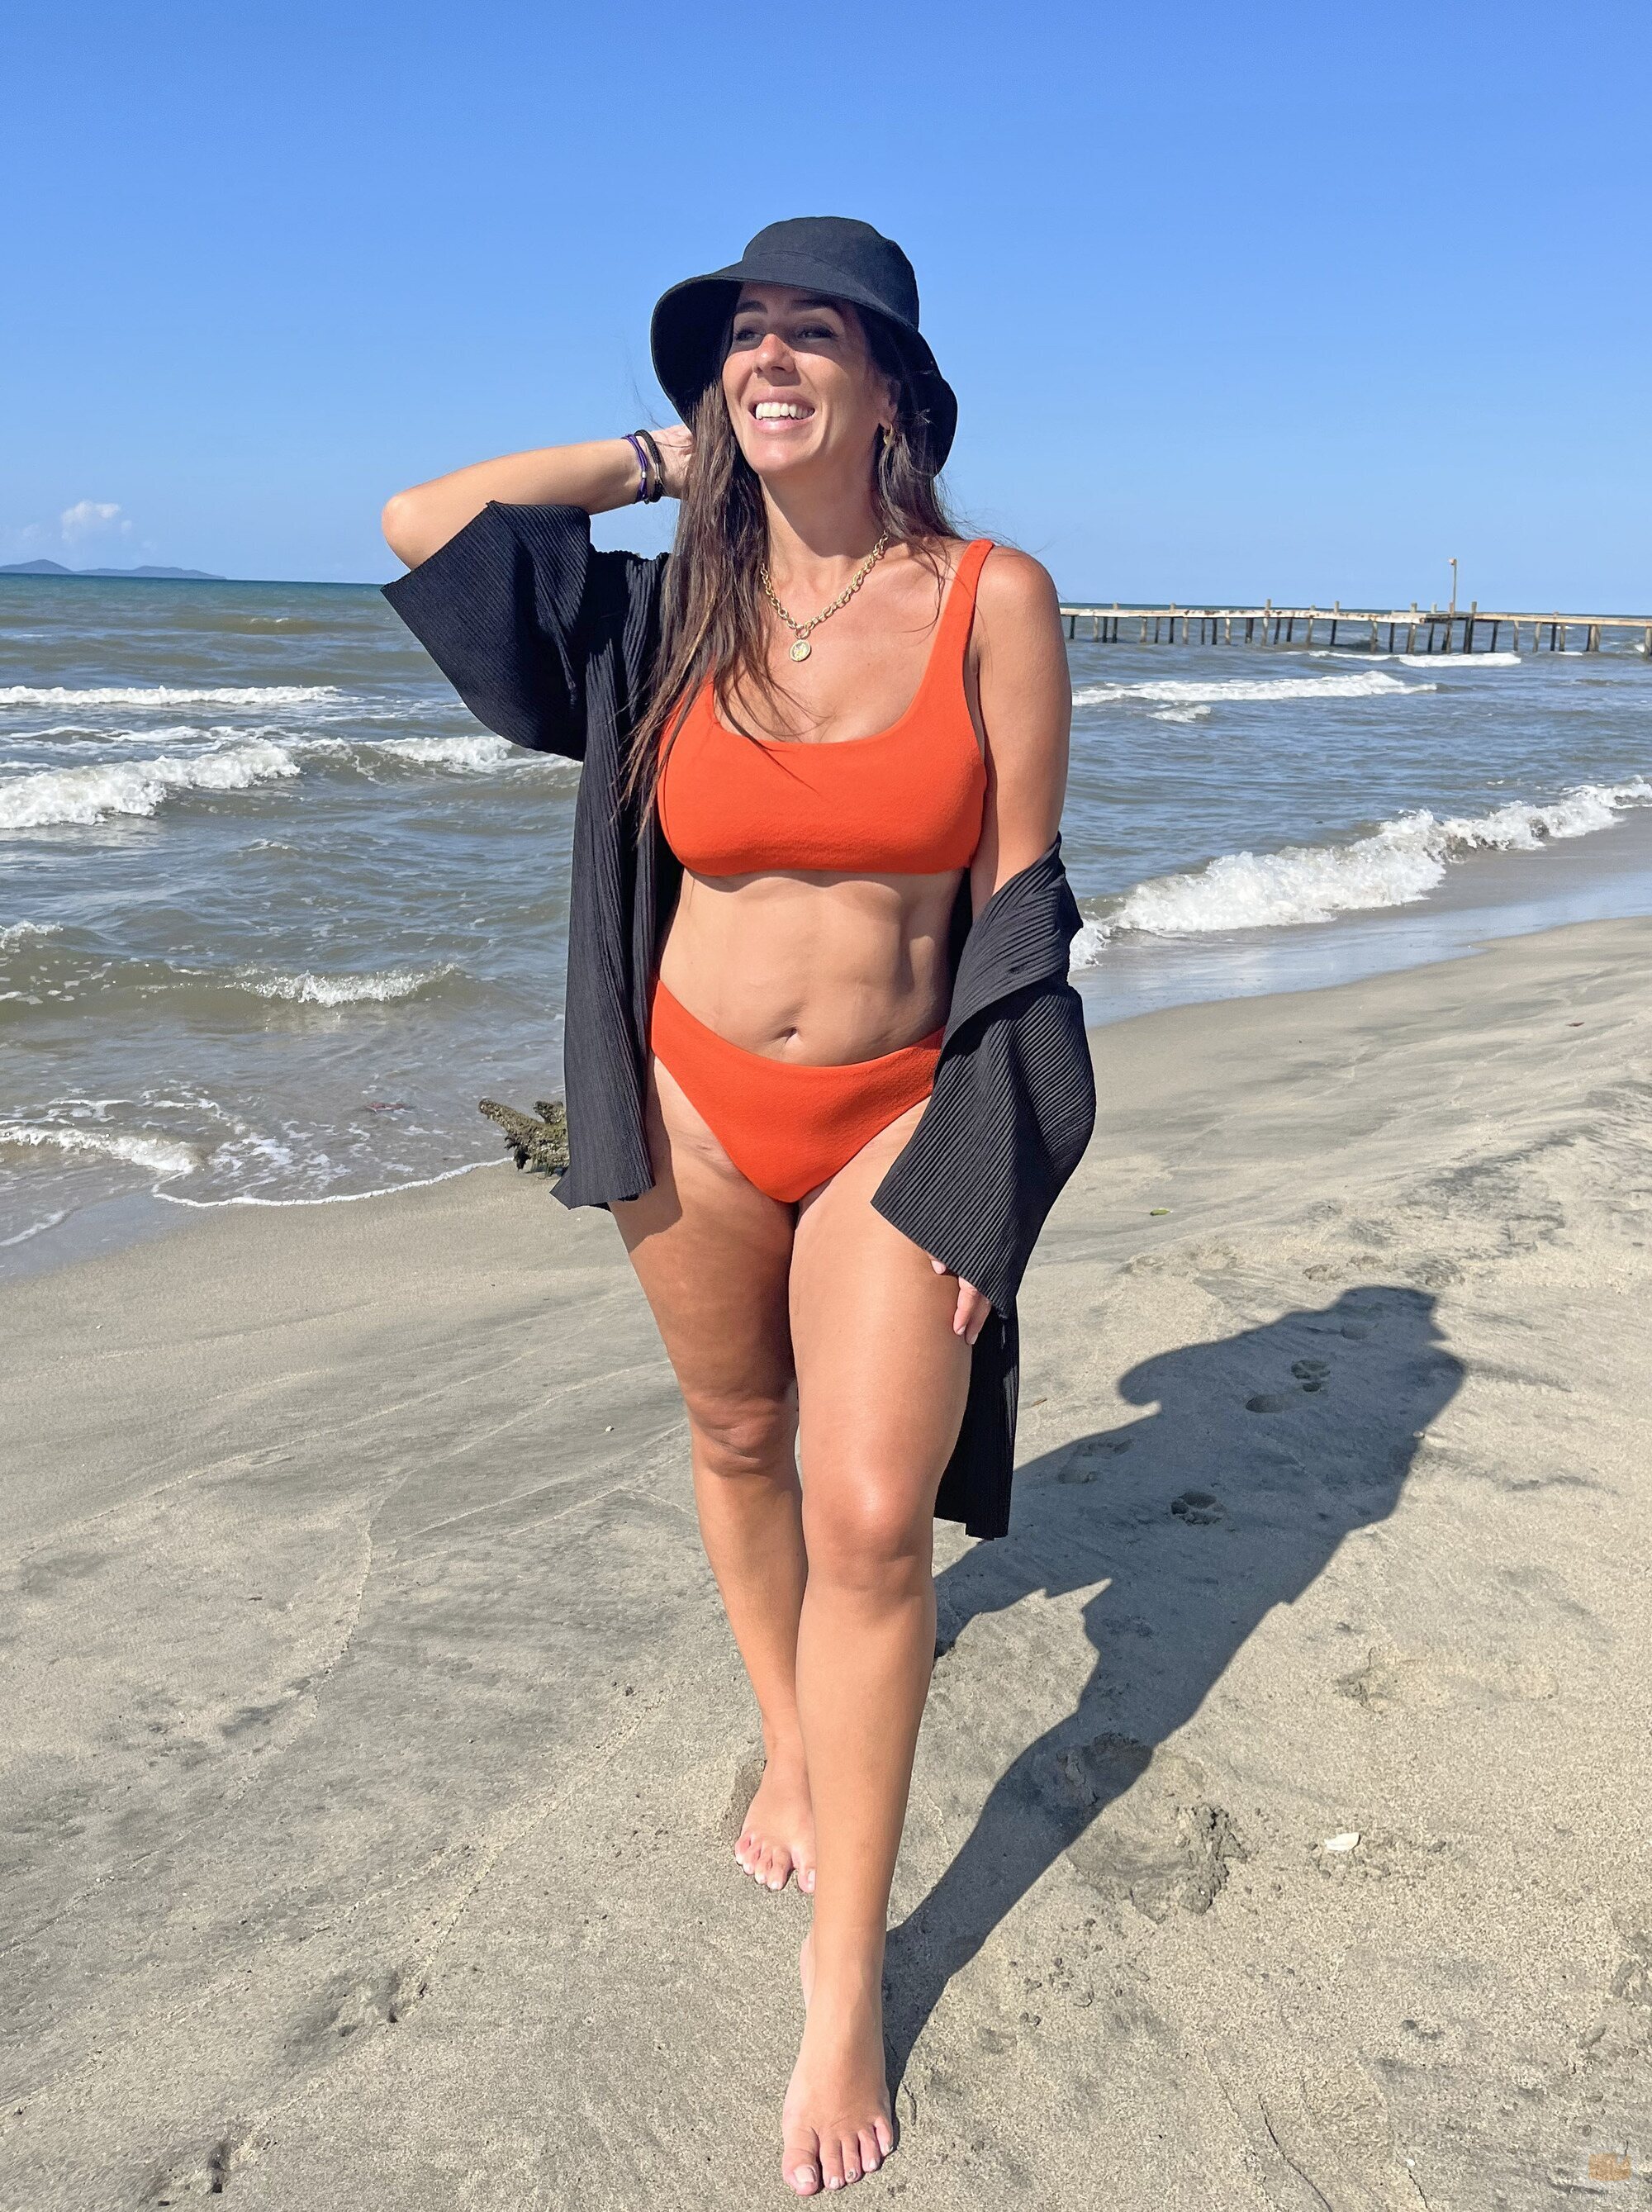 Anabel Pantoja posa en bikini en 'Supervivientes 2022'